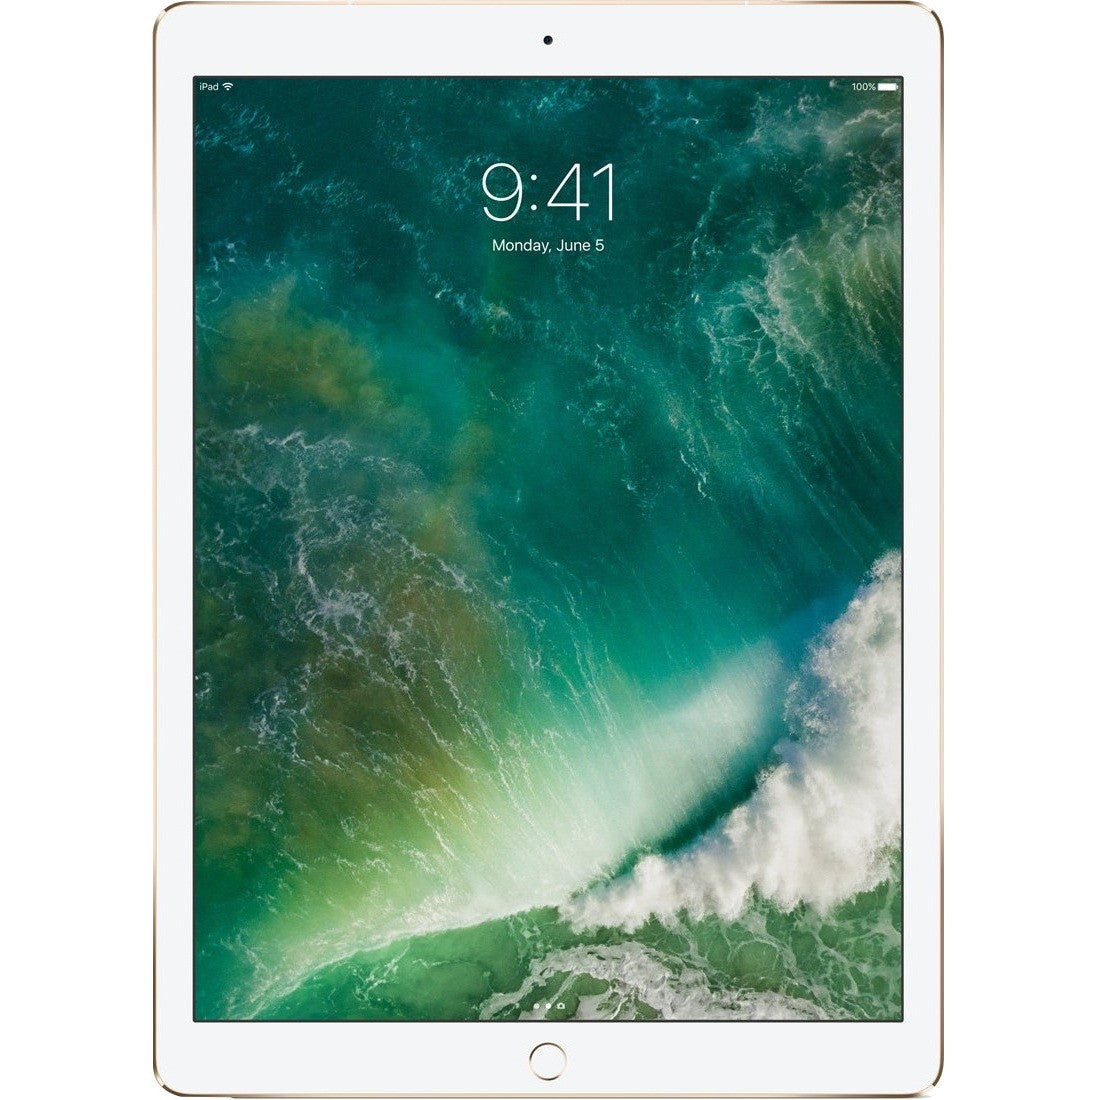 Apple iPad Pro Tablet - 12.9" - Apple A10X Hexa-core (6 Core) - 512 GB - iOS 10 - 2732 x 2048 - Retina Display - 4G - GSM, CDMA2000 Supported - Gold